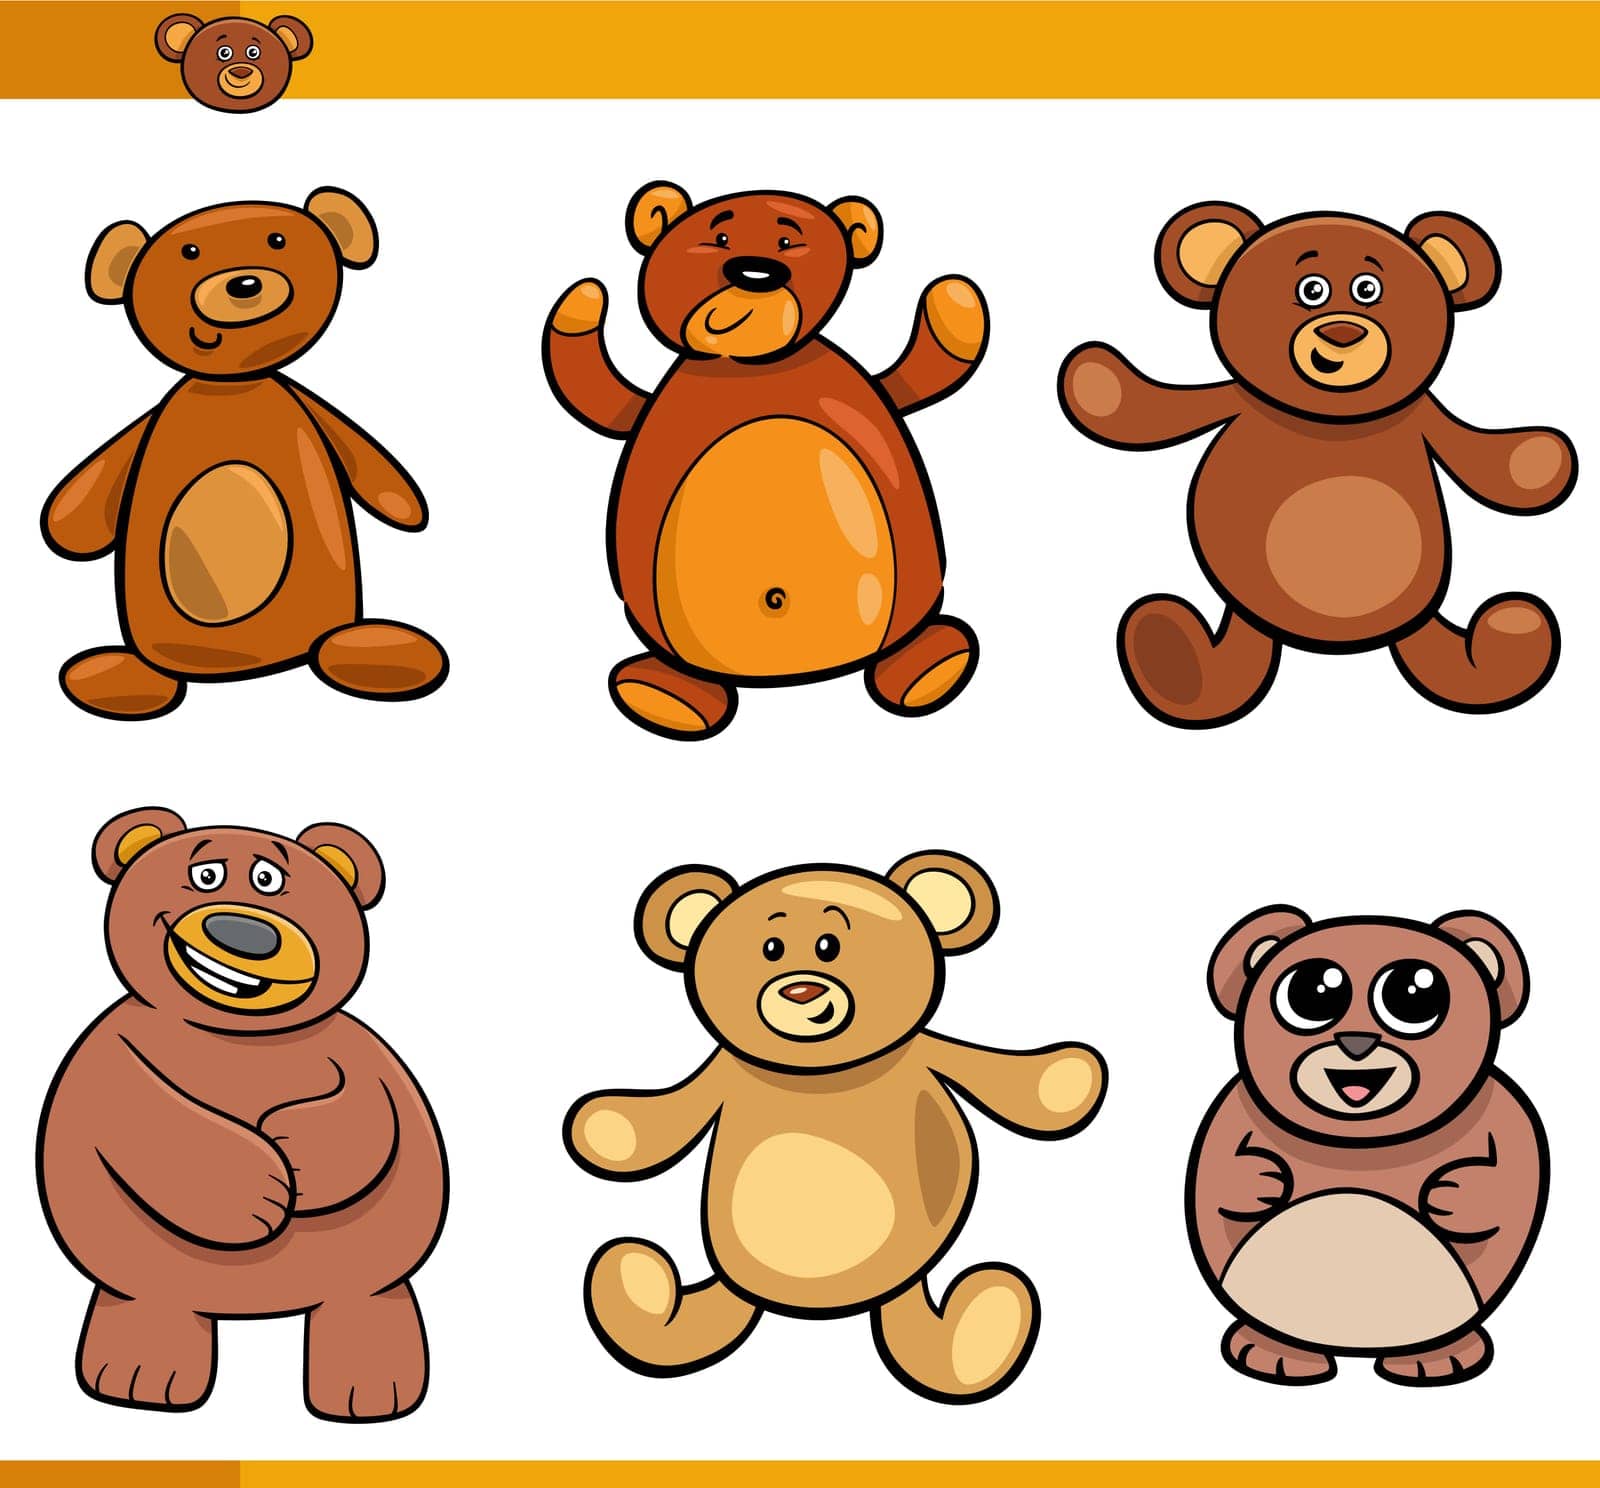 cartoon funny cute bears animal comic characters set by izakowski